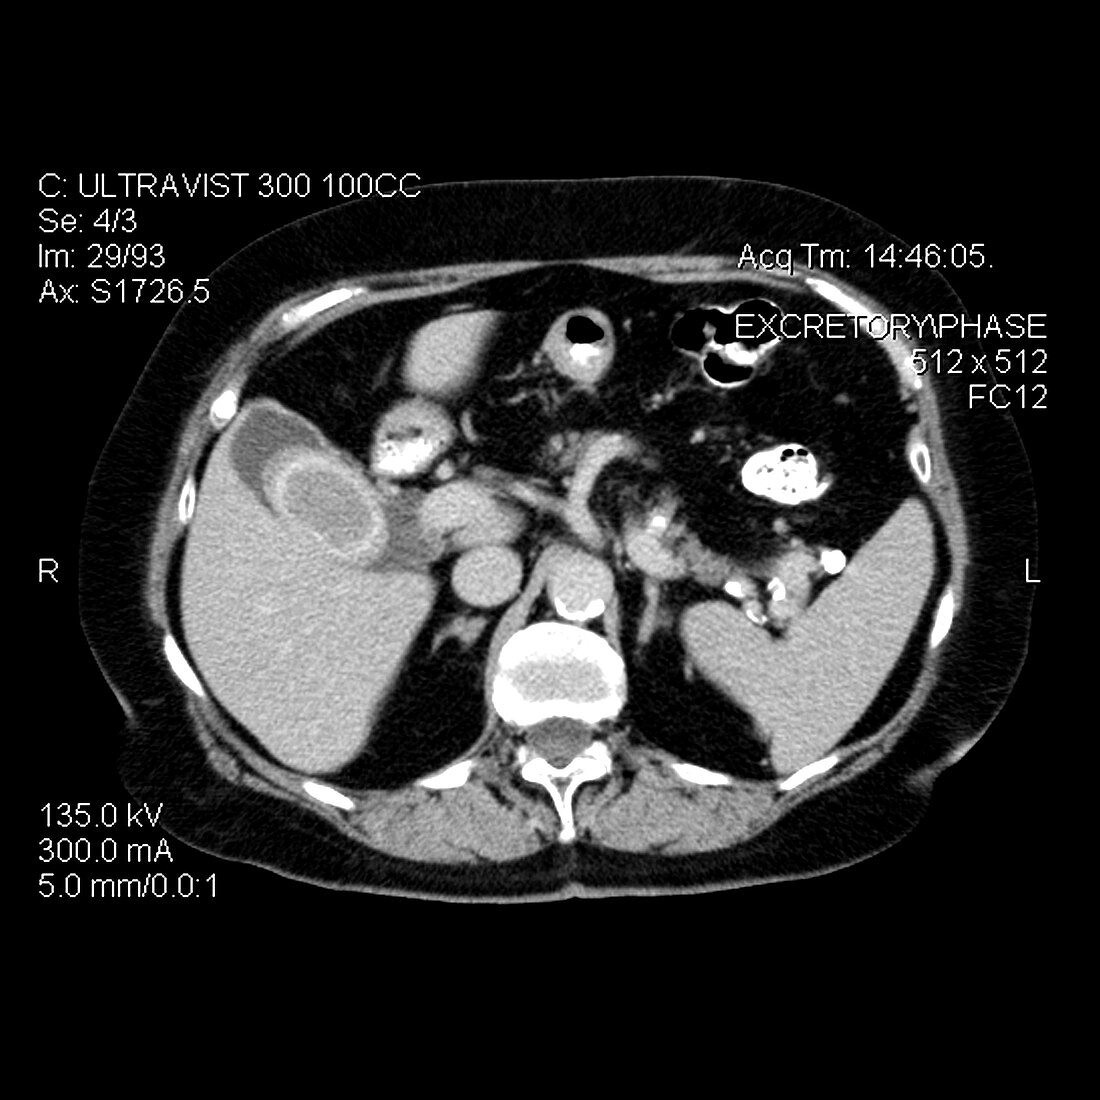 CT of Abdomen Shows Large Gallstone